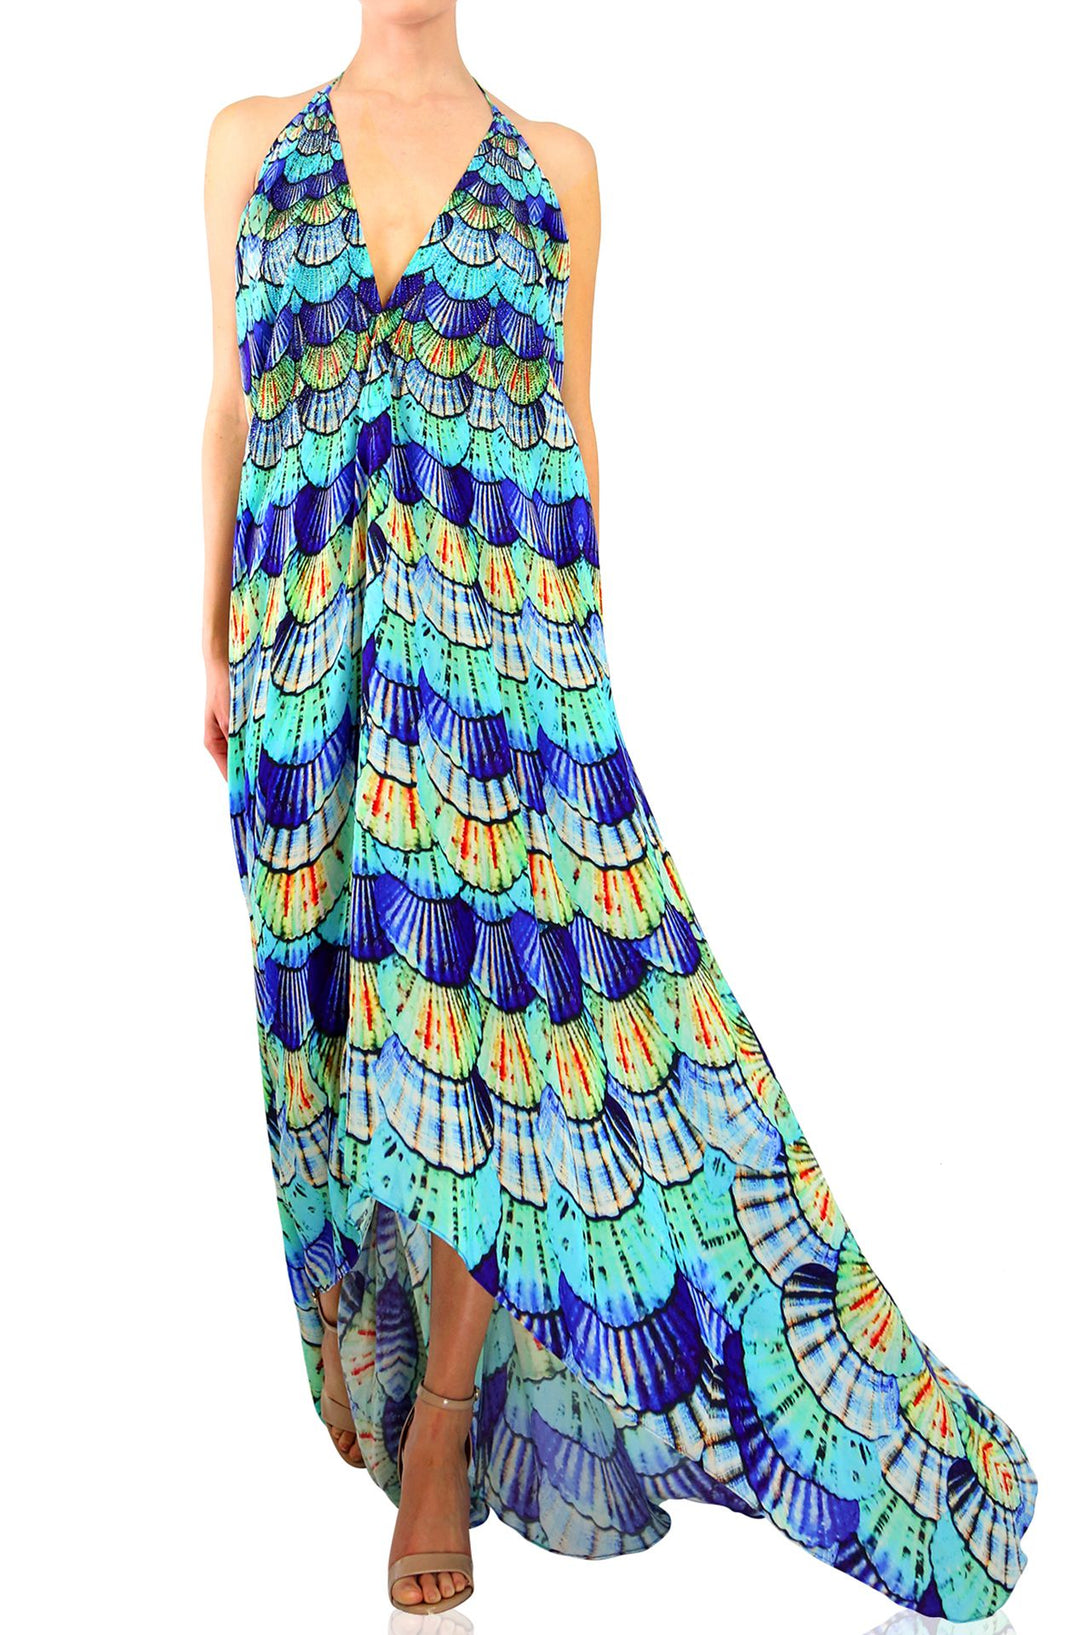 "navy blue dresses for women" "beach maxi dress" "Shahida Parides" "summer maxi dress"